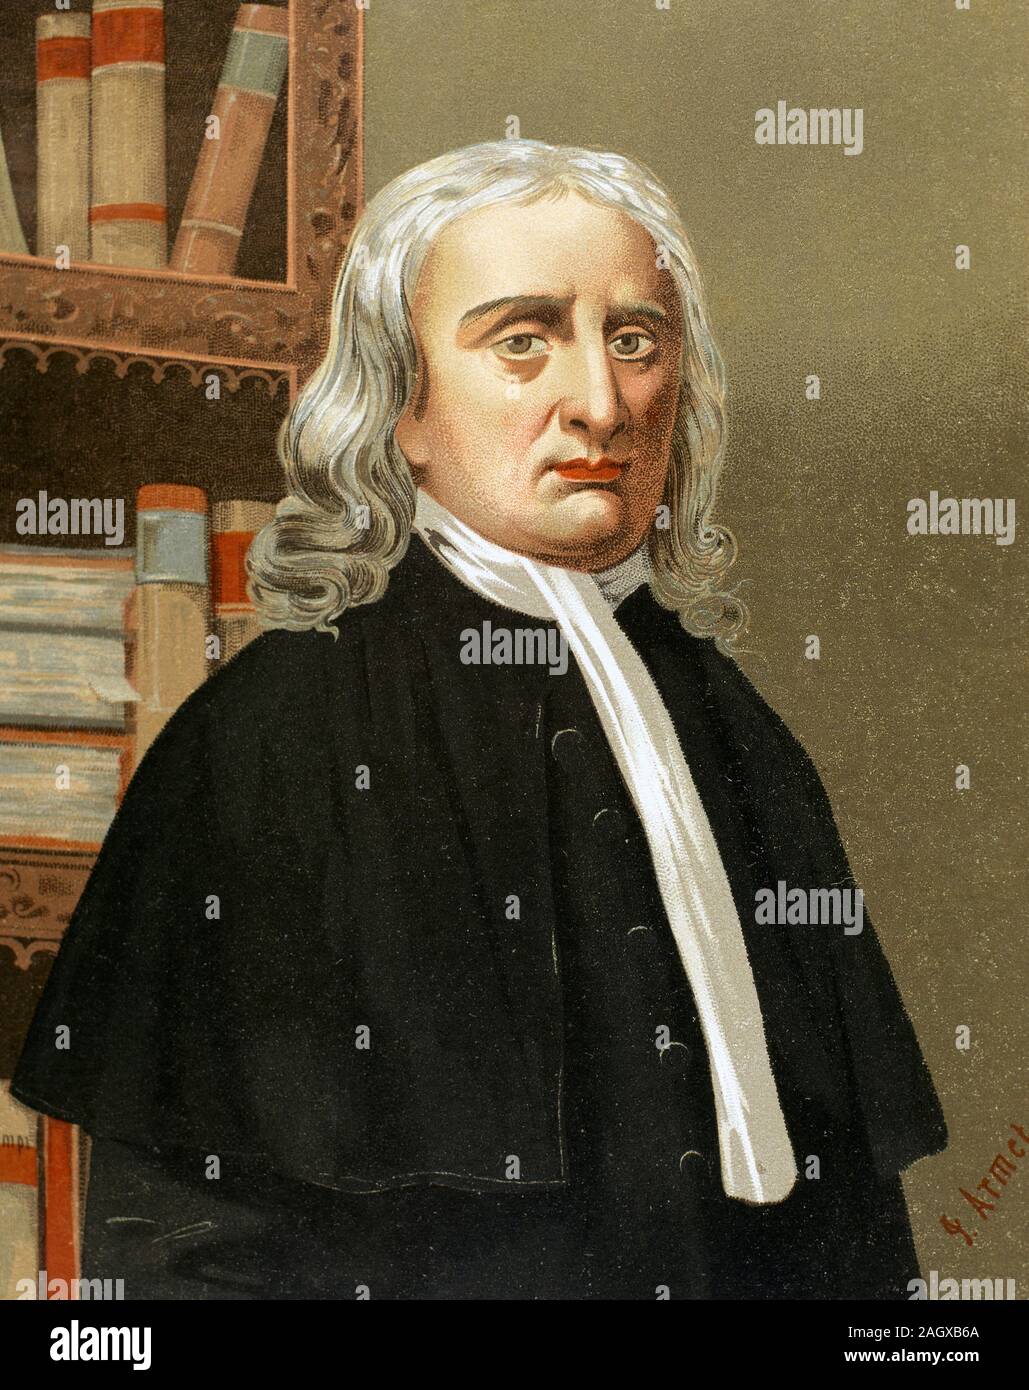 Isaac Newton (1642-1726/1727). English mathematician, astronomer and physicist. Chromolithography, 1876. Stock Photo